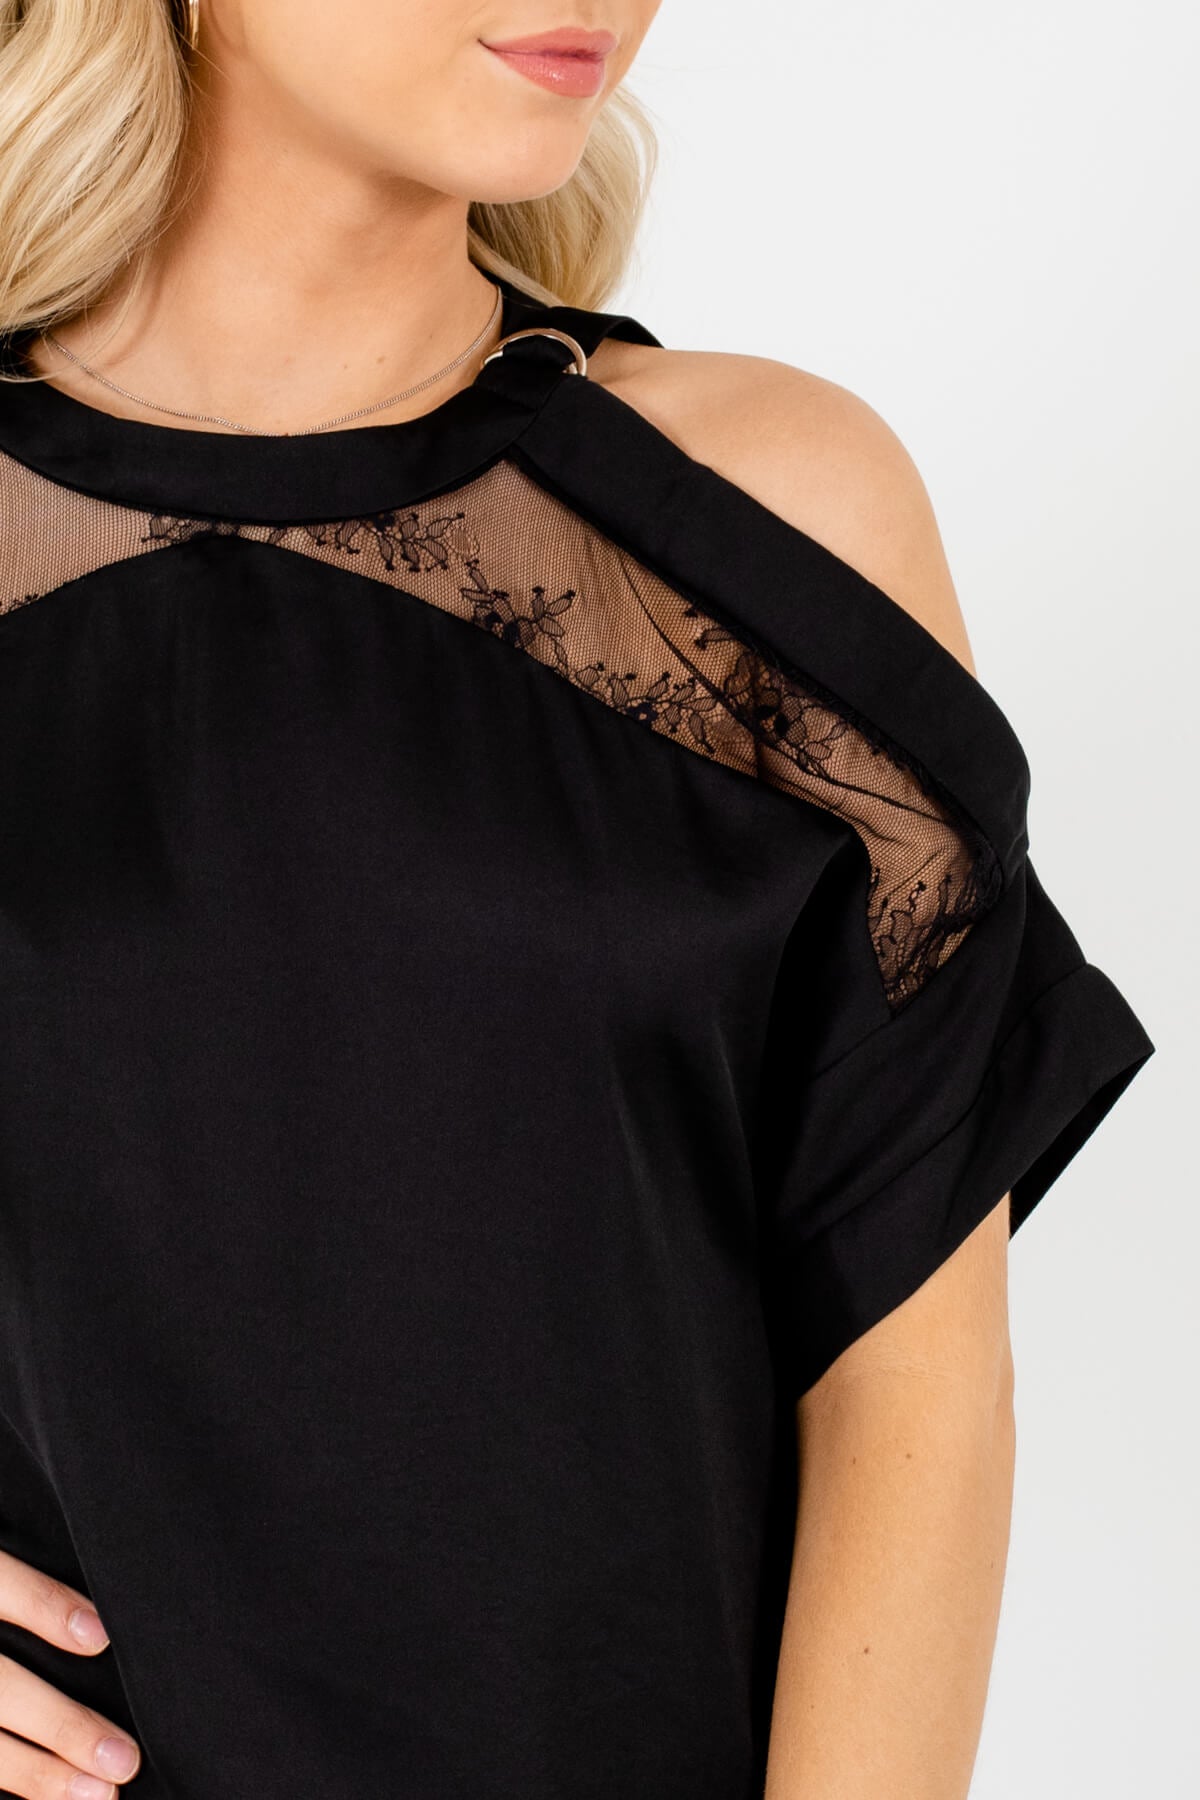 Black Satin Lace Cold Shoulder Blouses Affordable Online Boutique